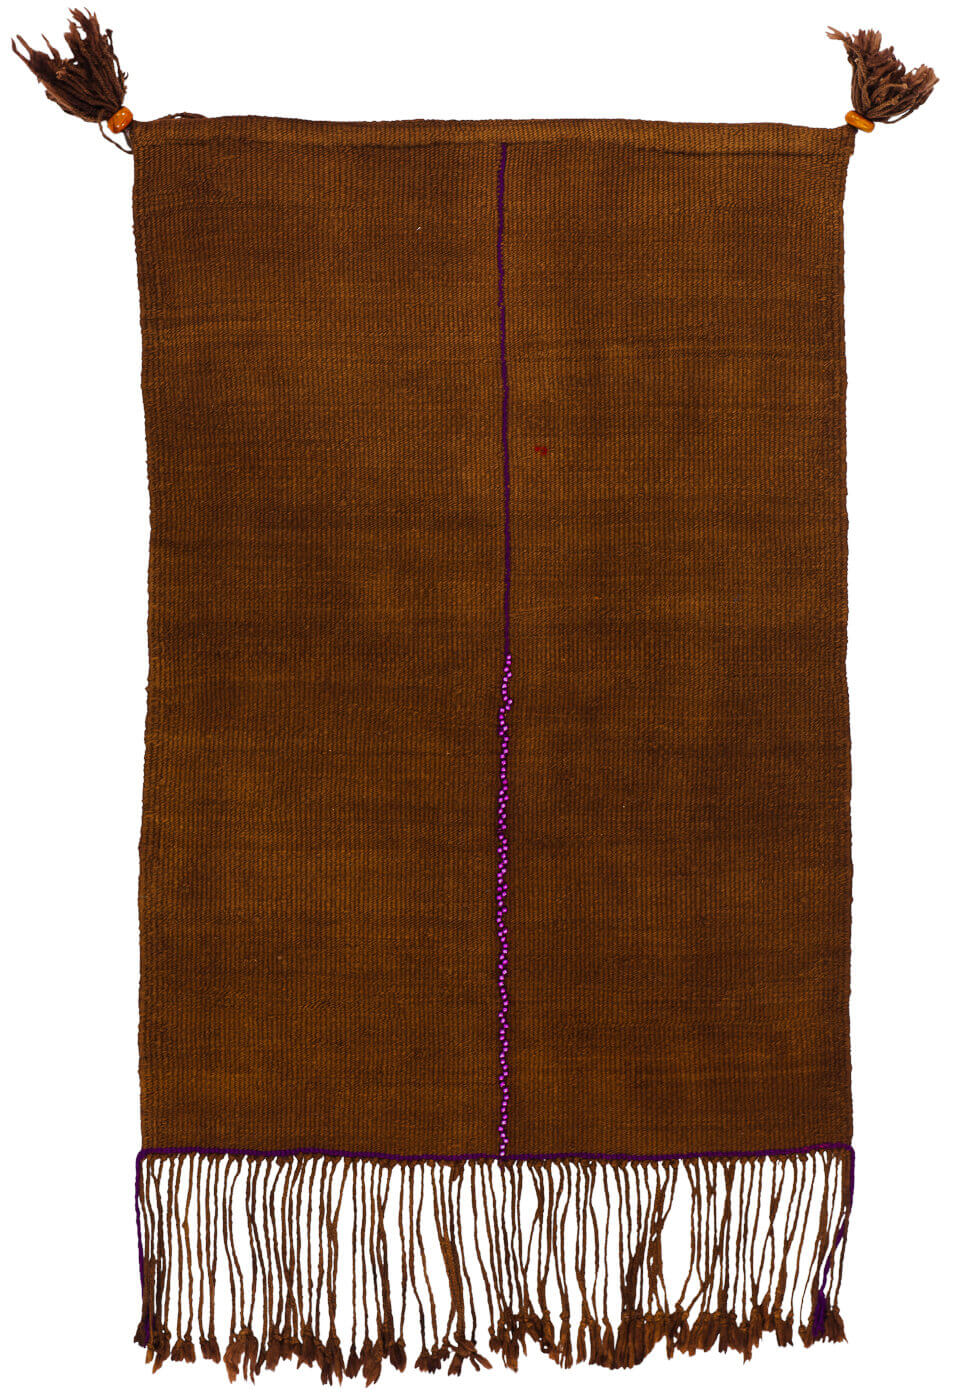 Tribal Brown & Purple Luxury Hand-woven Rug